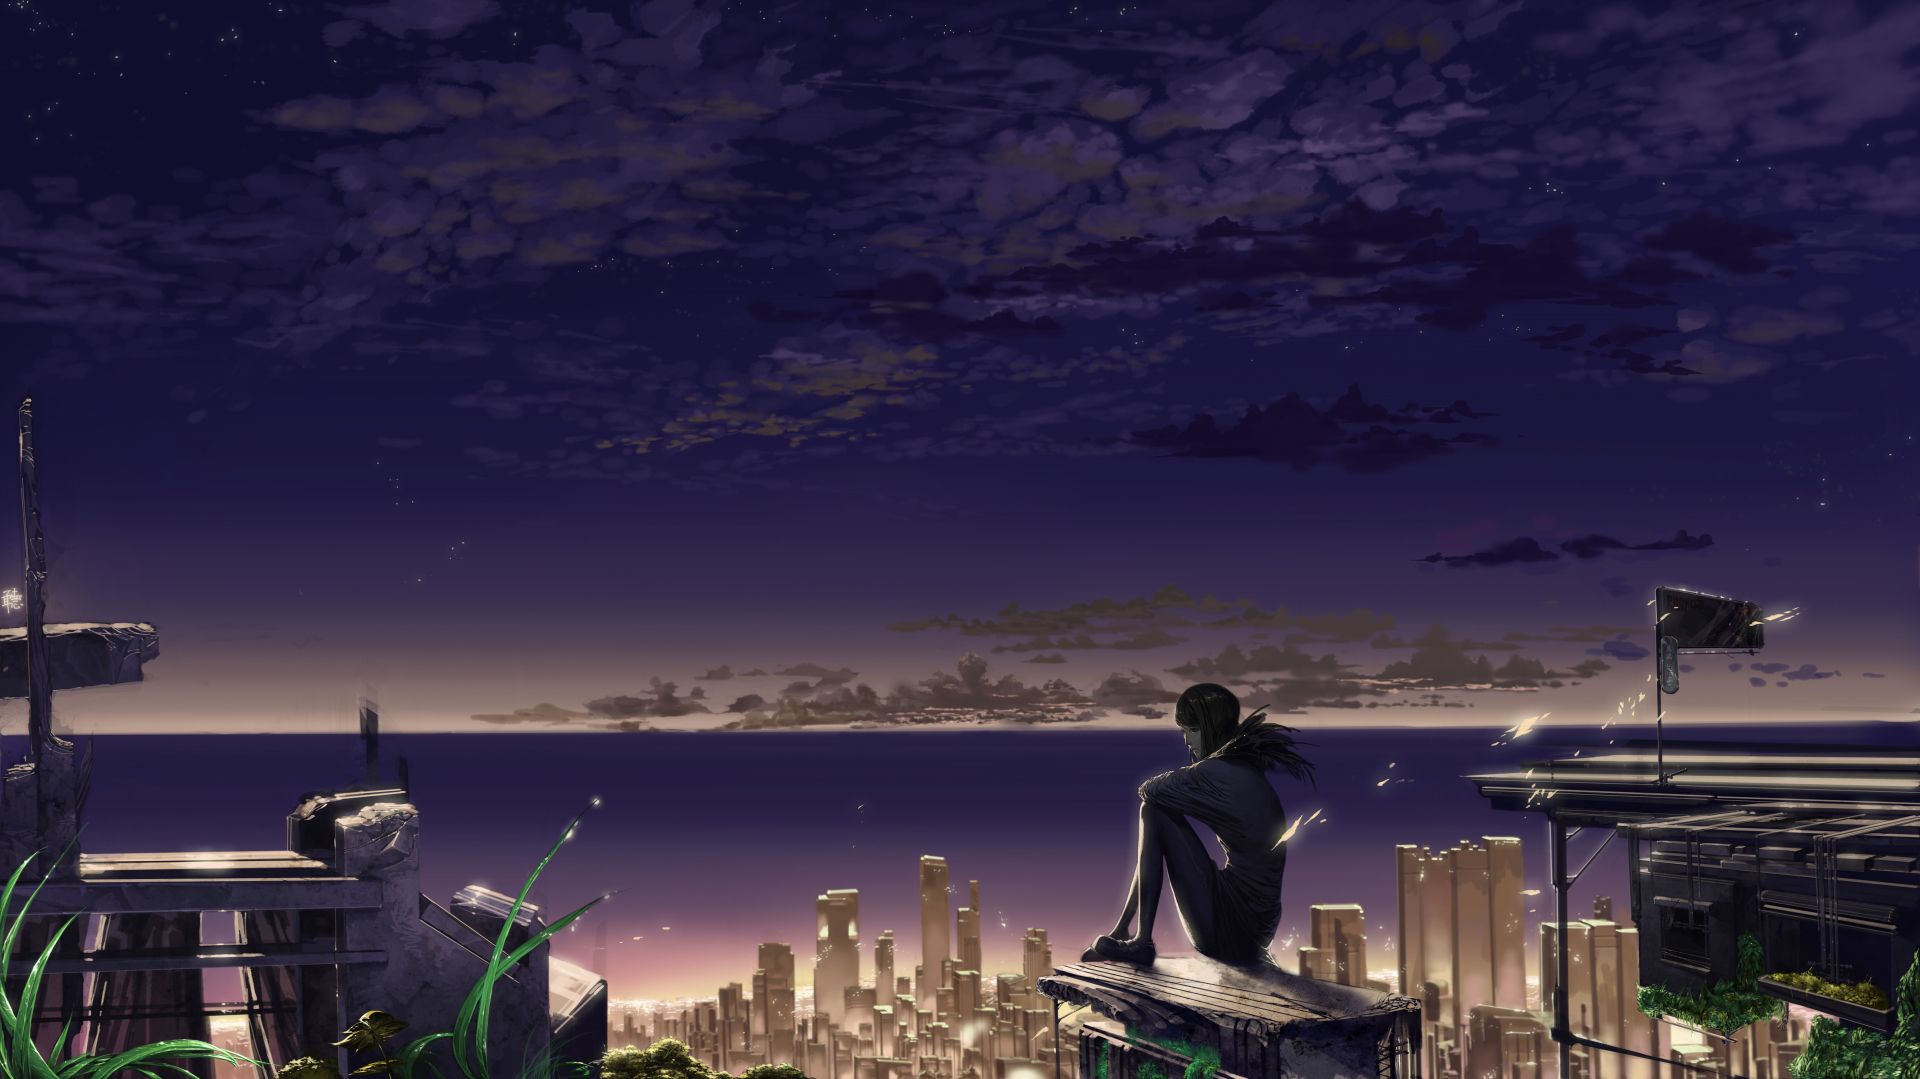 Materi Pelajaran 10: Anime Night Sky City